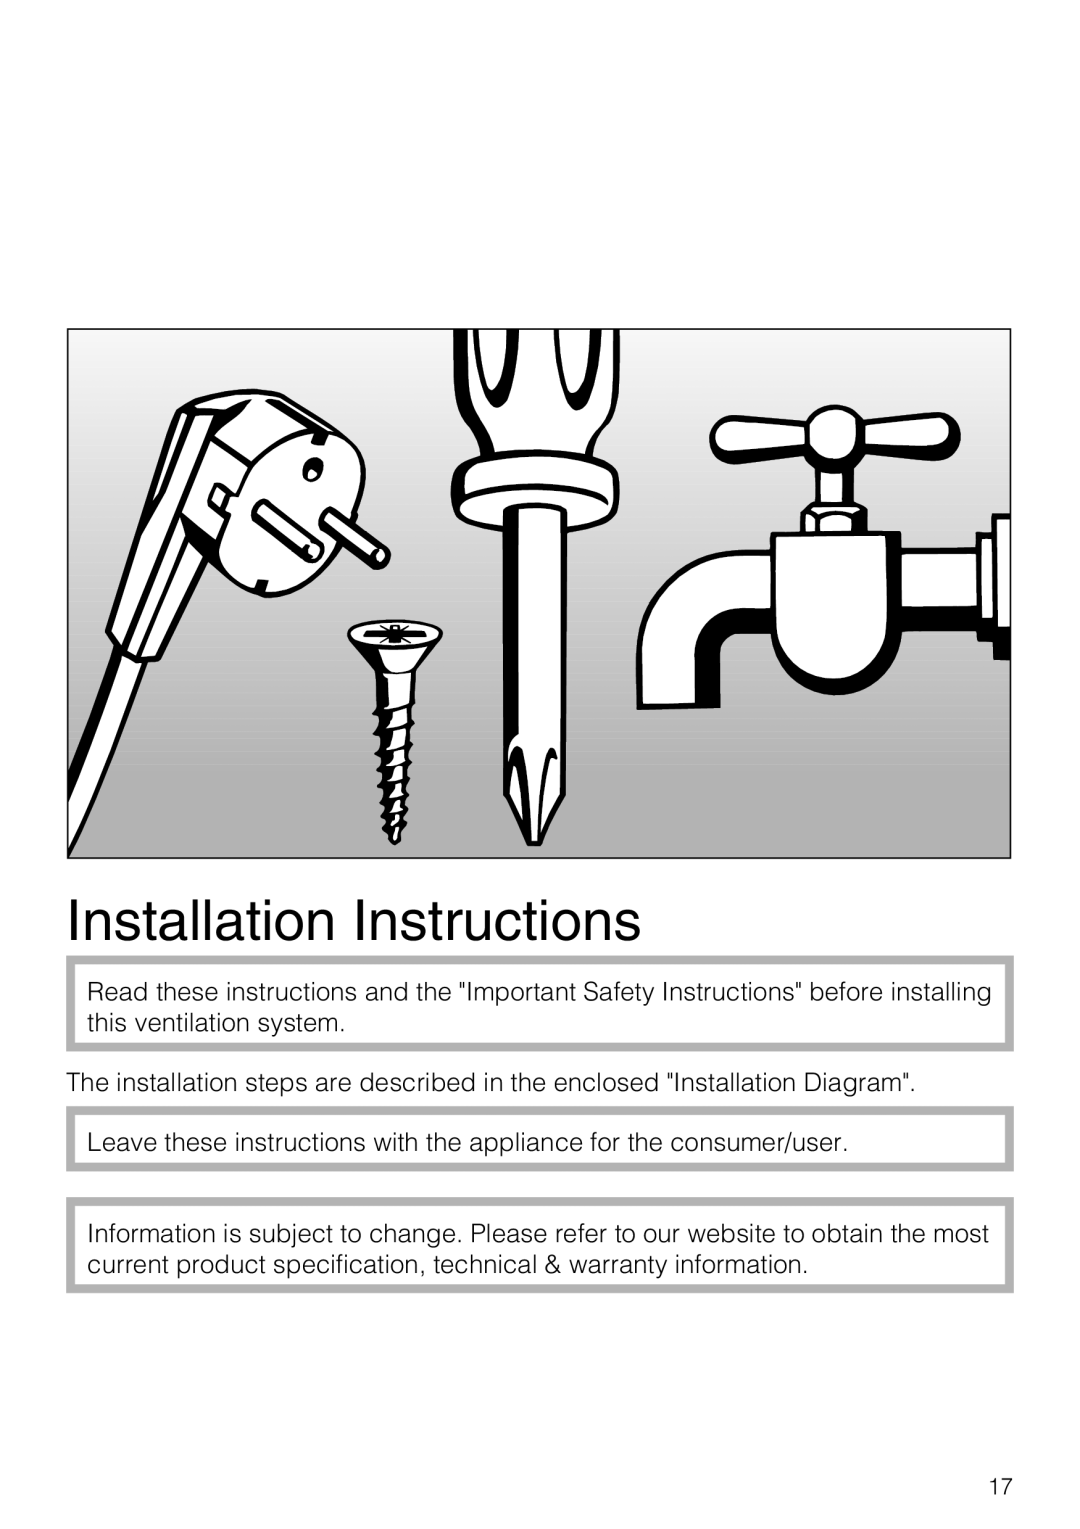 Miele 09 824 260 installation instructions Installation Instructions 